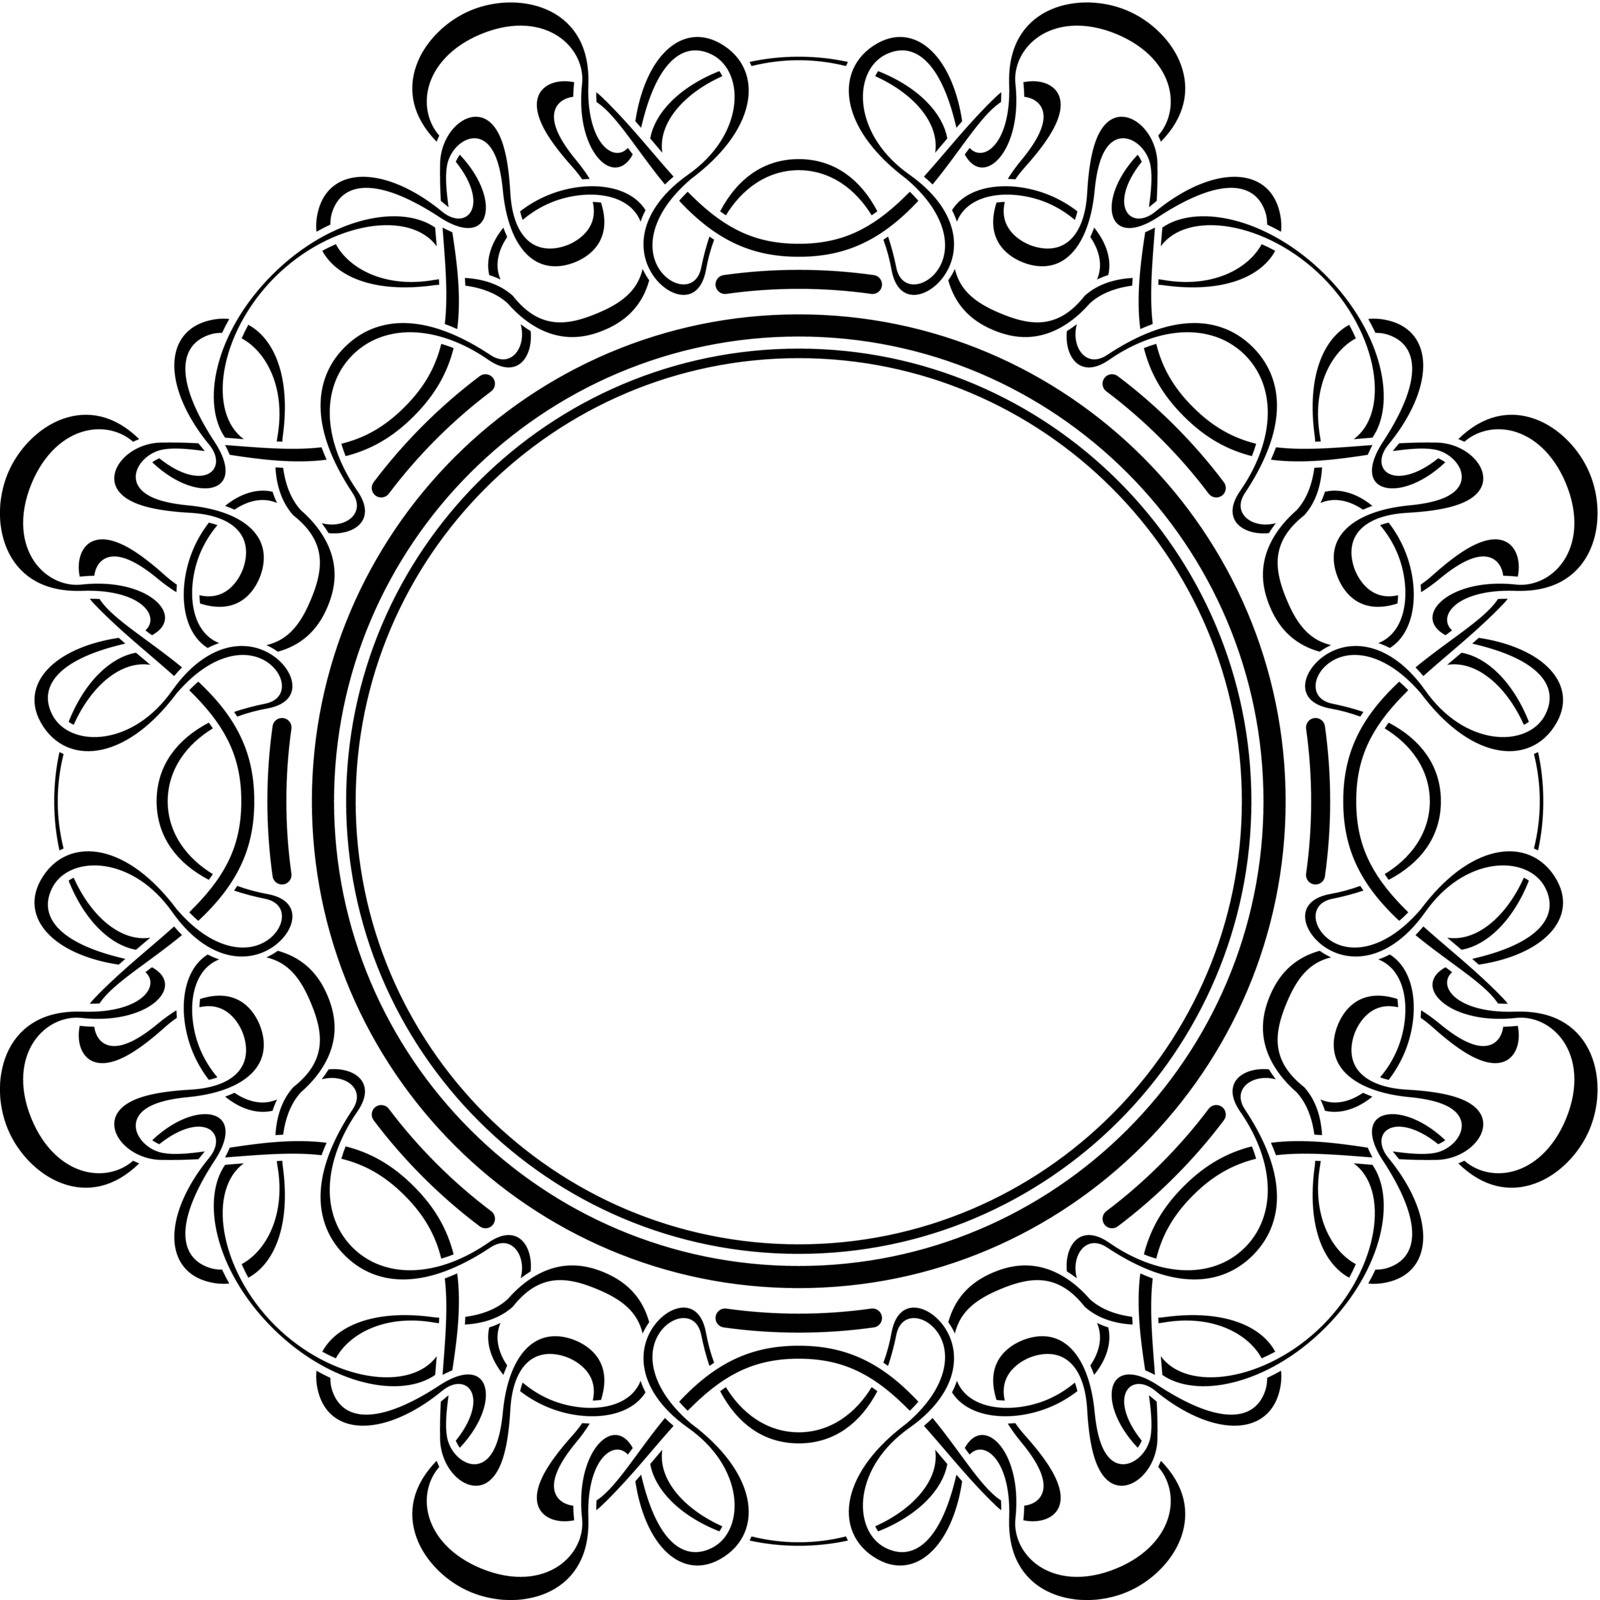 Black frame with ornamental border